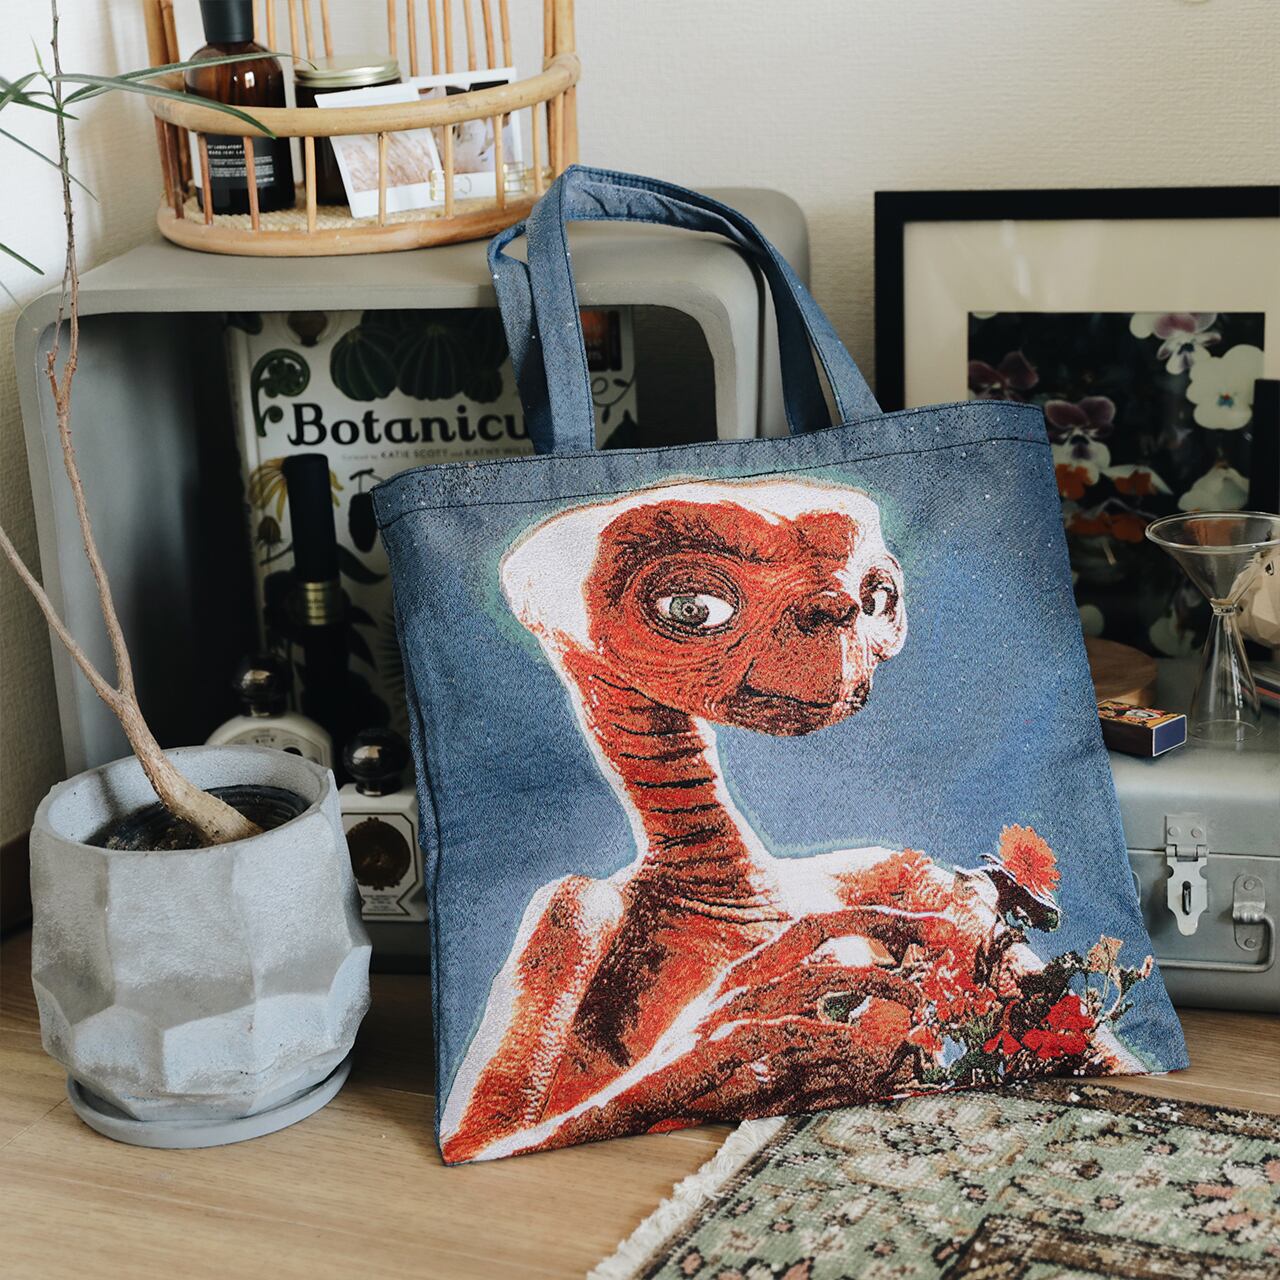 E.T. Tote bag Holding a flowerpot